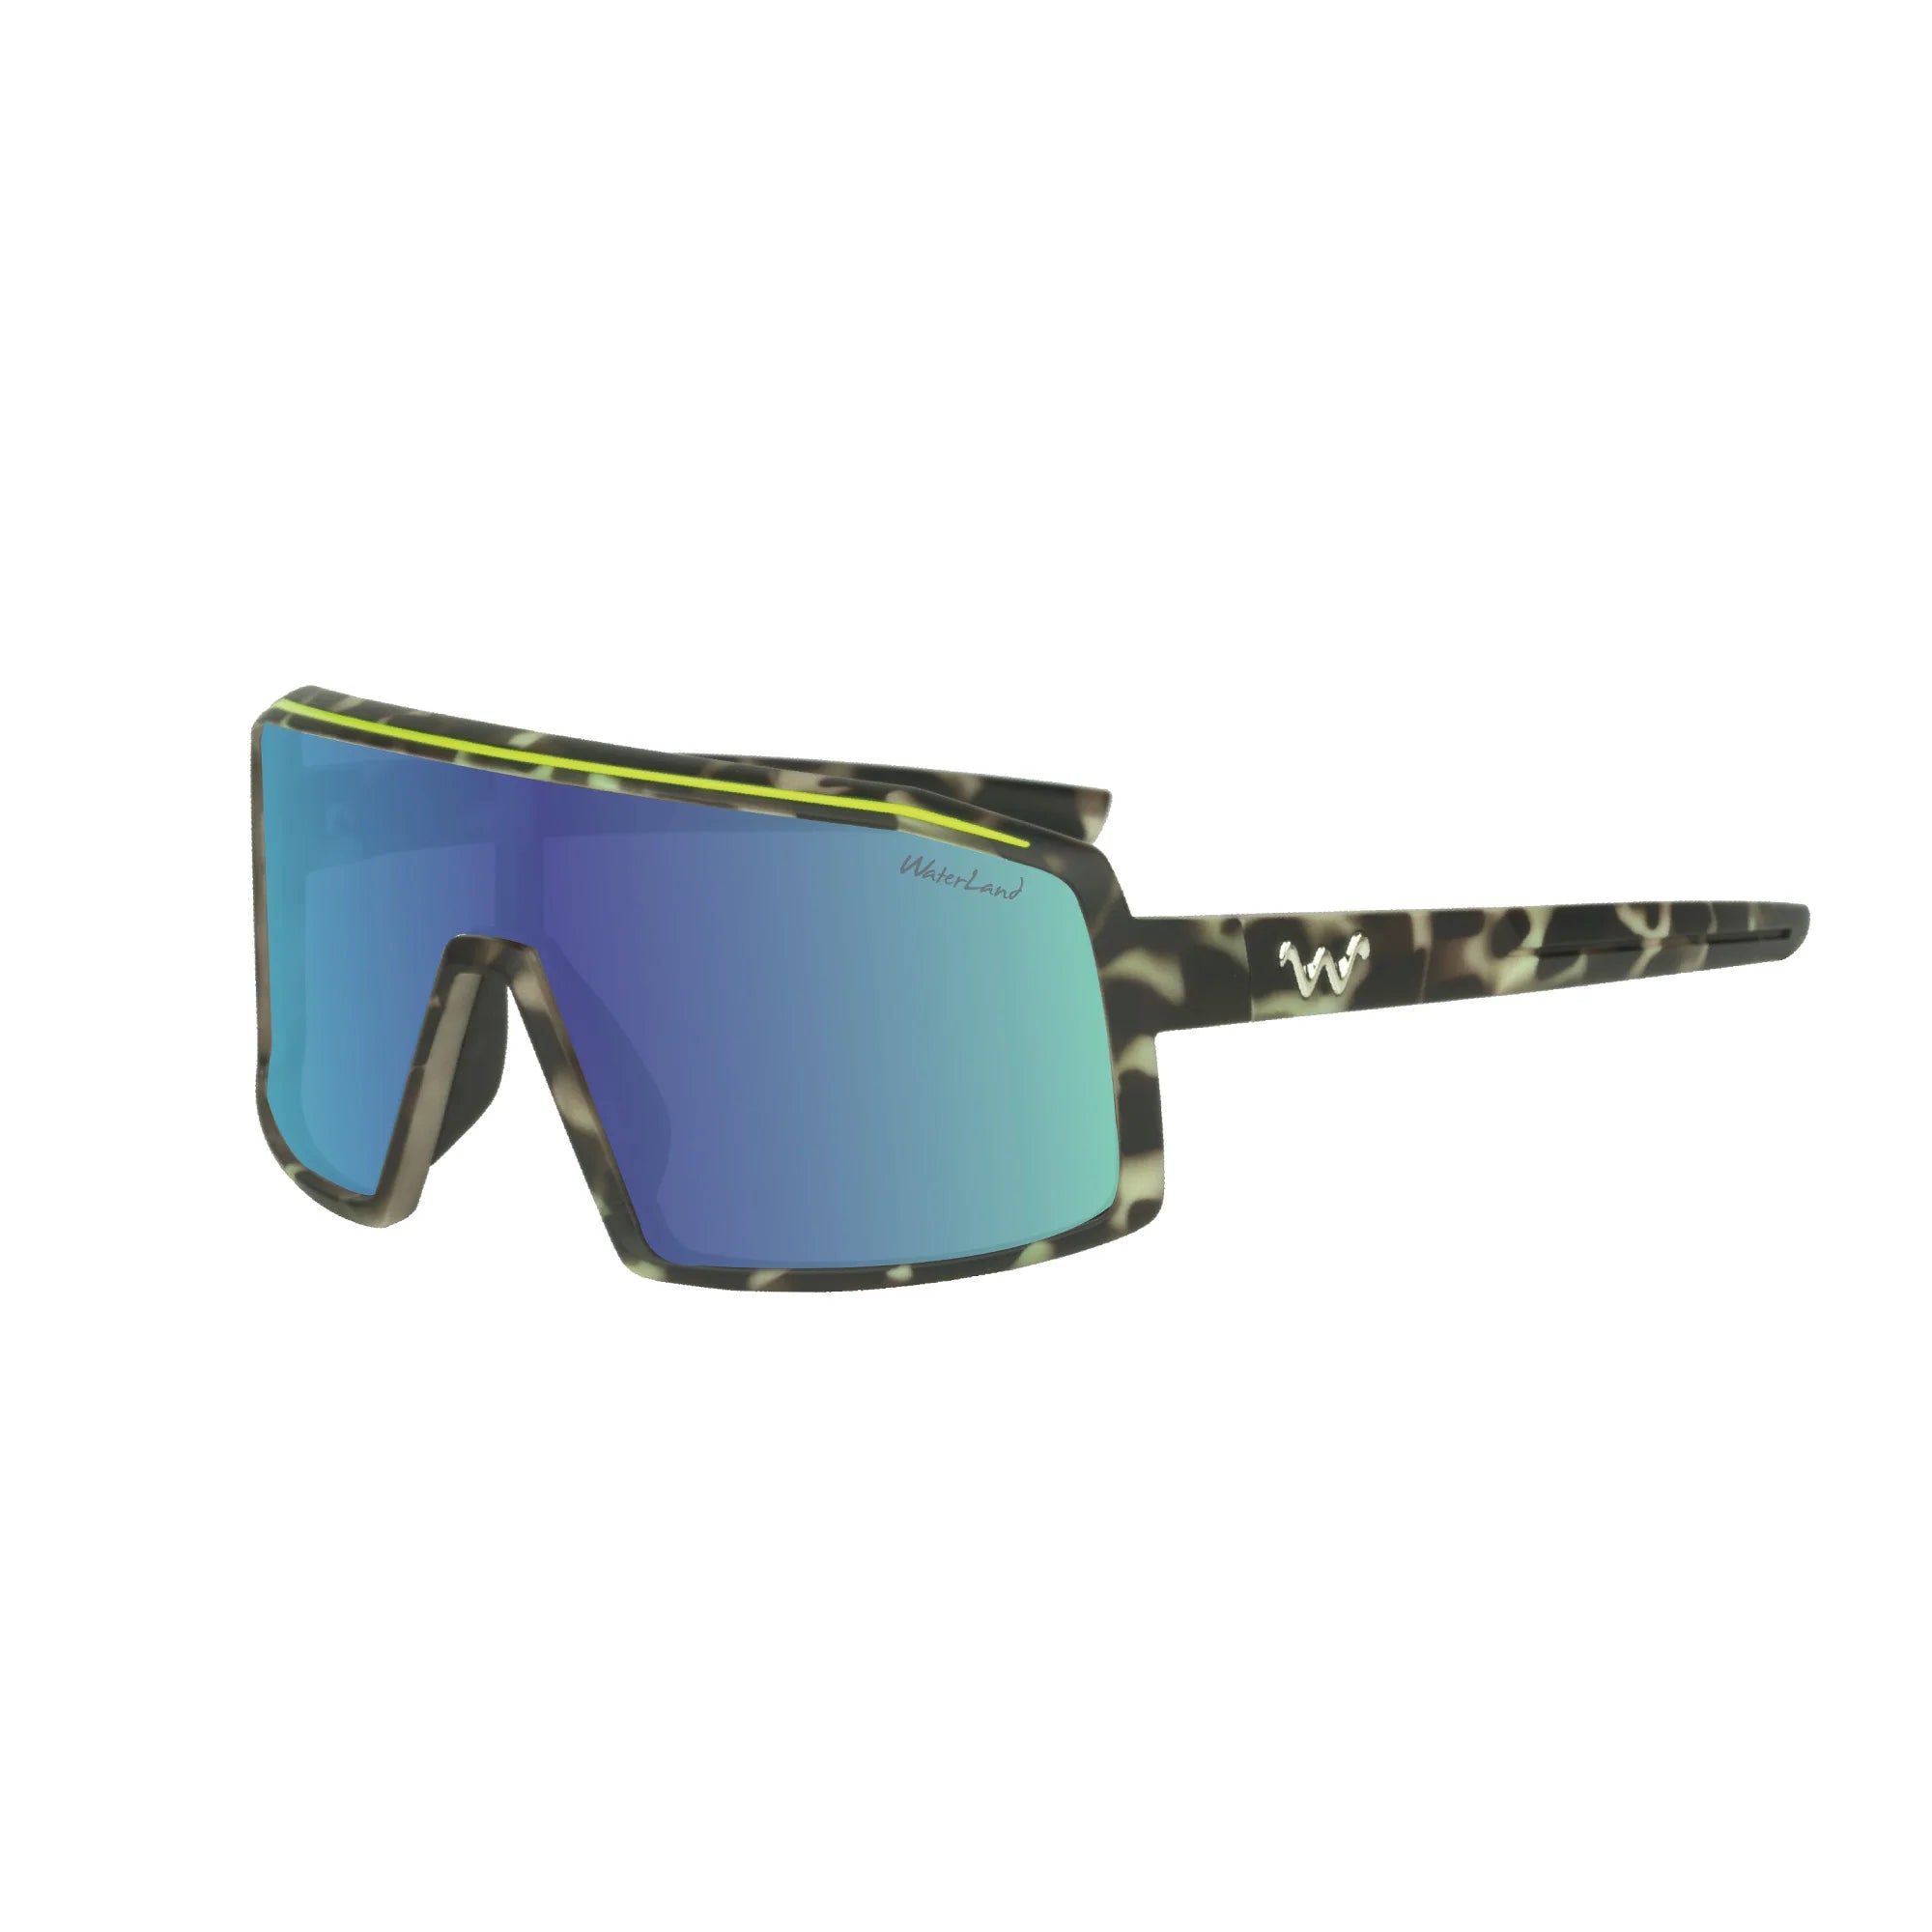 Waterland Cooker Sunglasses Black Frame w/ Green Mirror